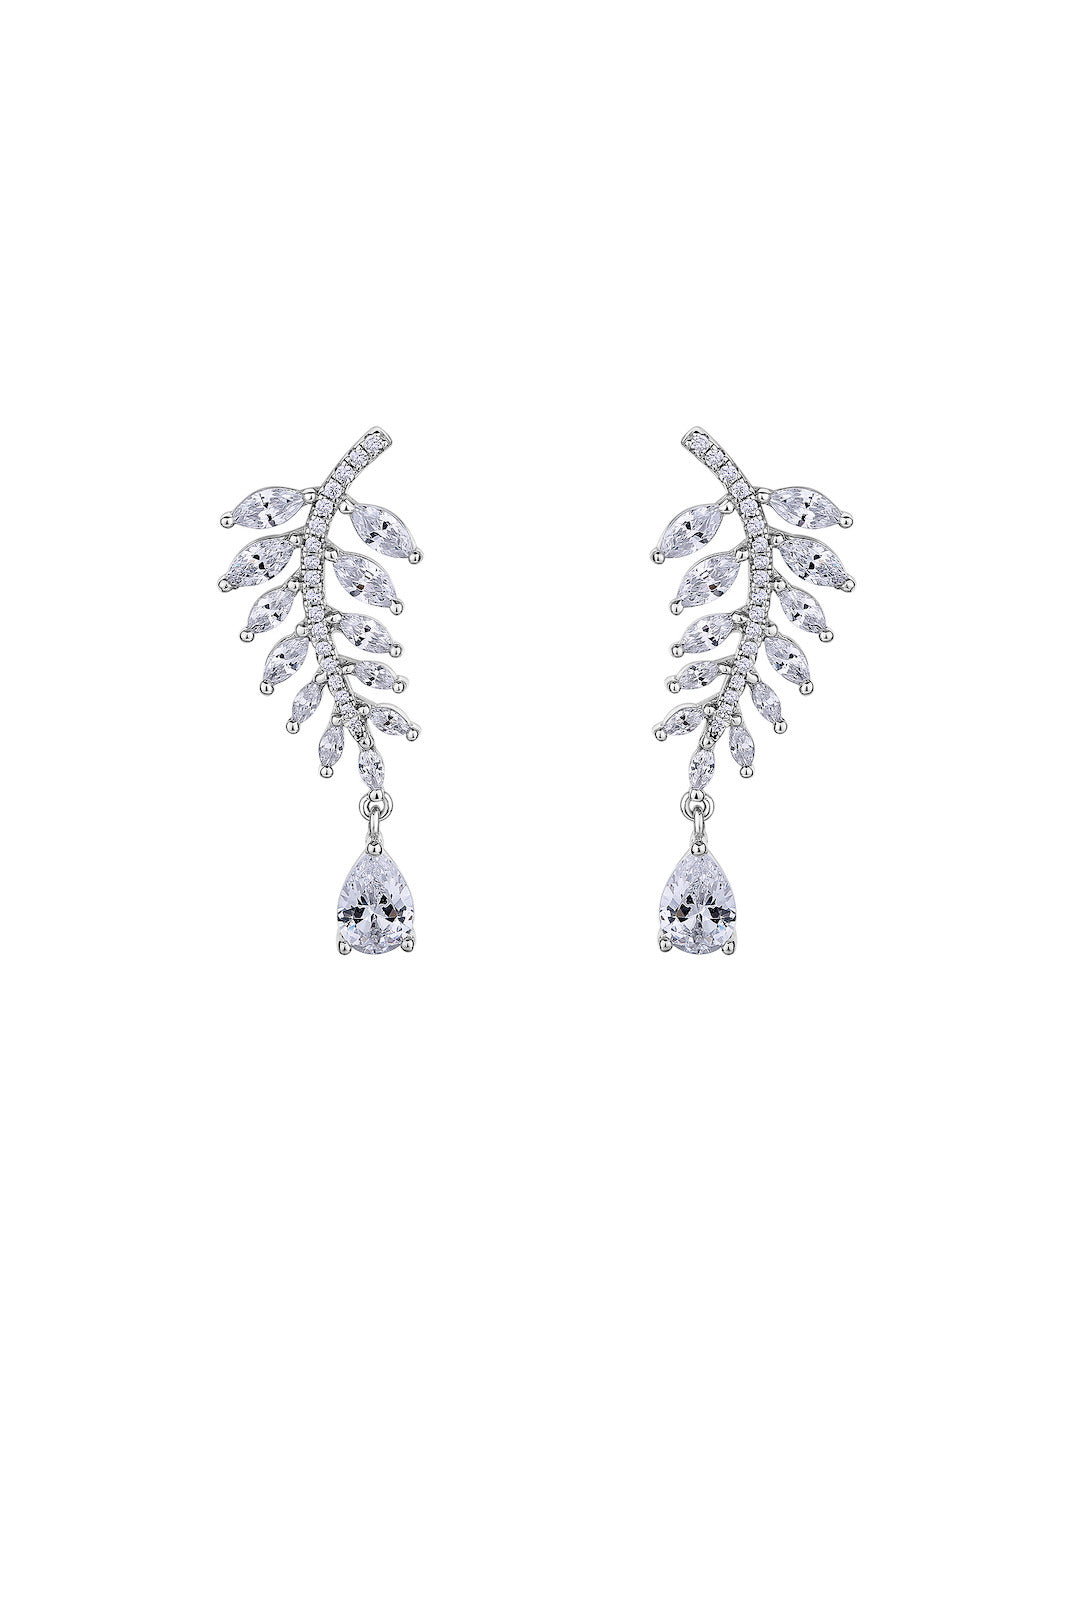 Falling Leaves White Sparkle Silver Stud Earrings